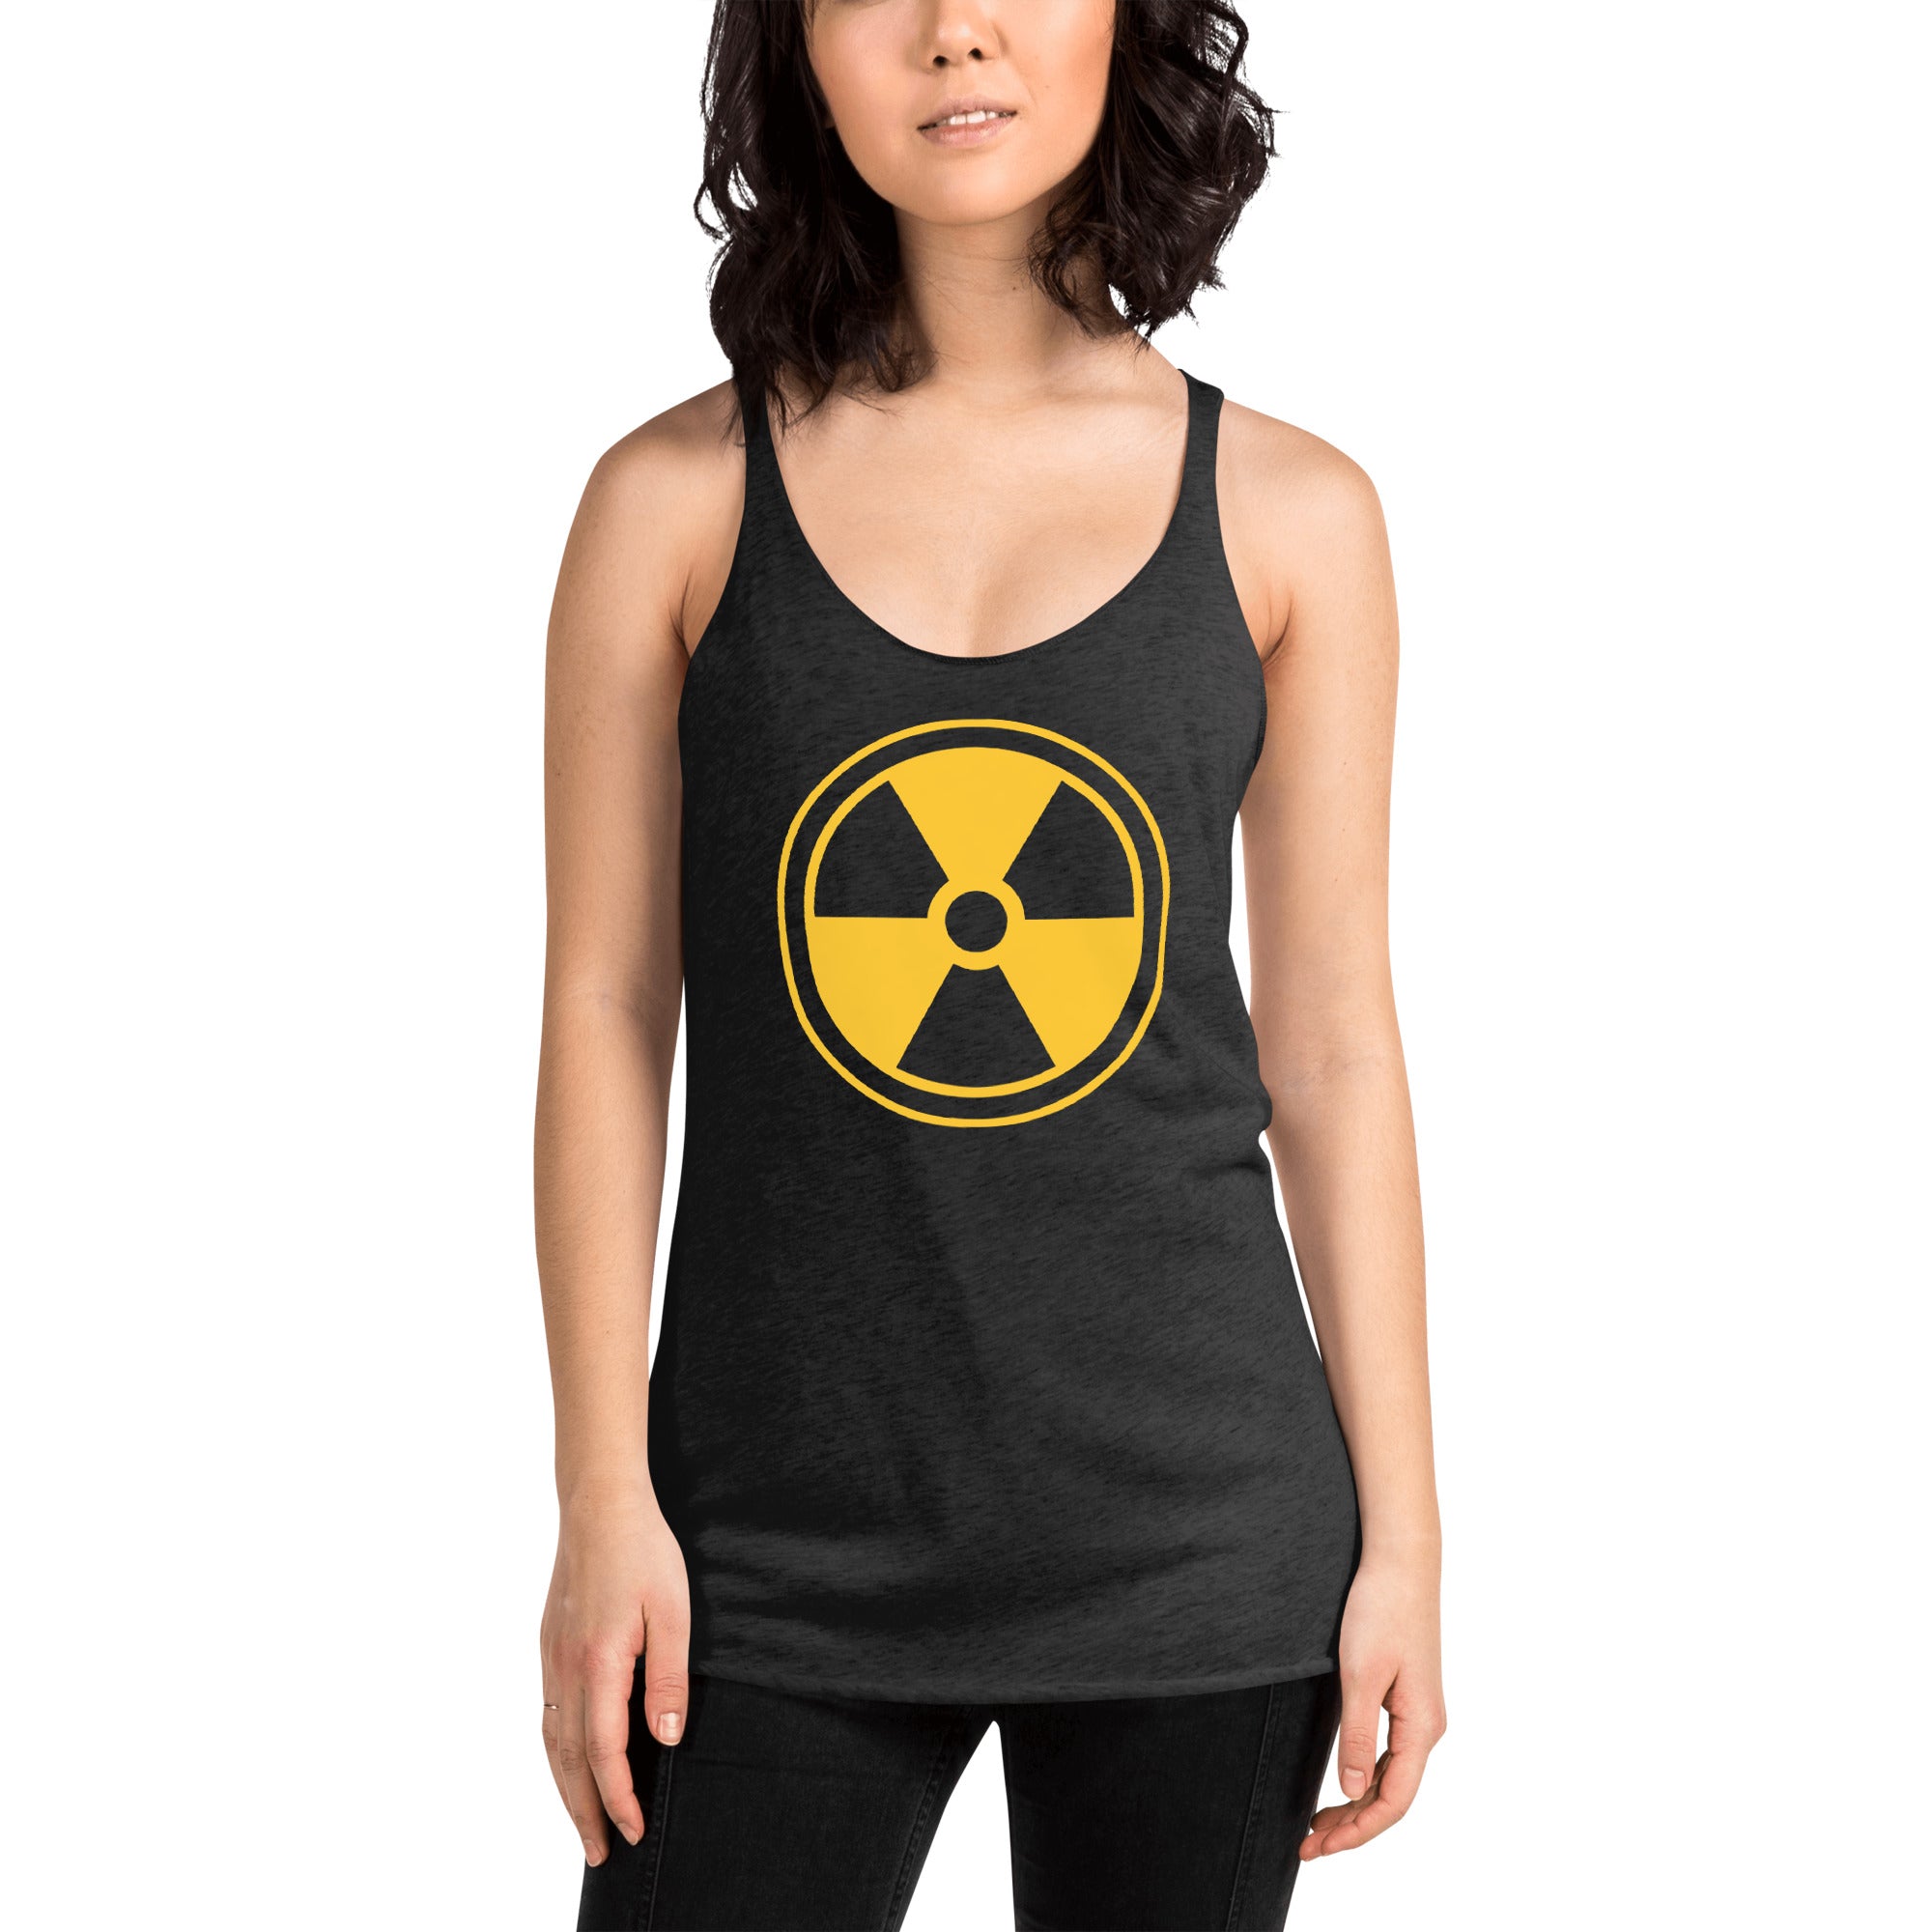 Yellow Radioactive Radiation Warning Sign Women's Racerback Tank Top Shirt